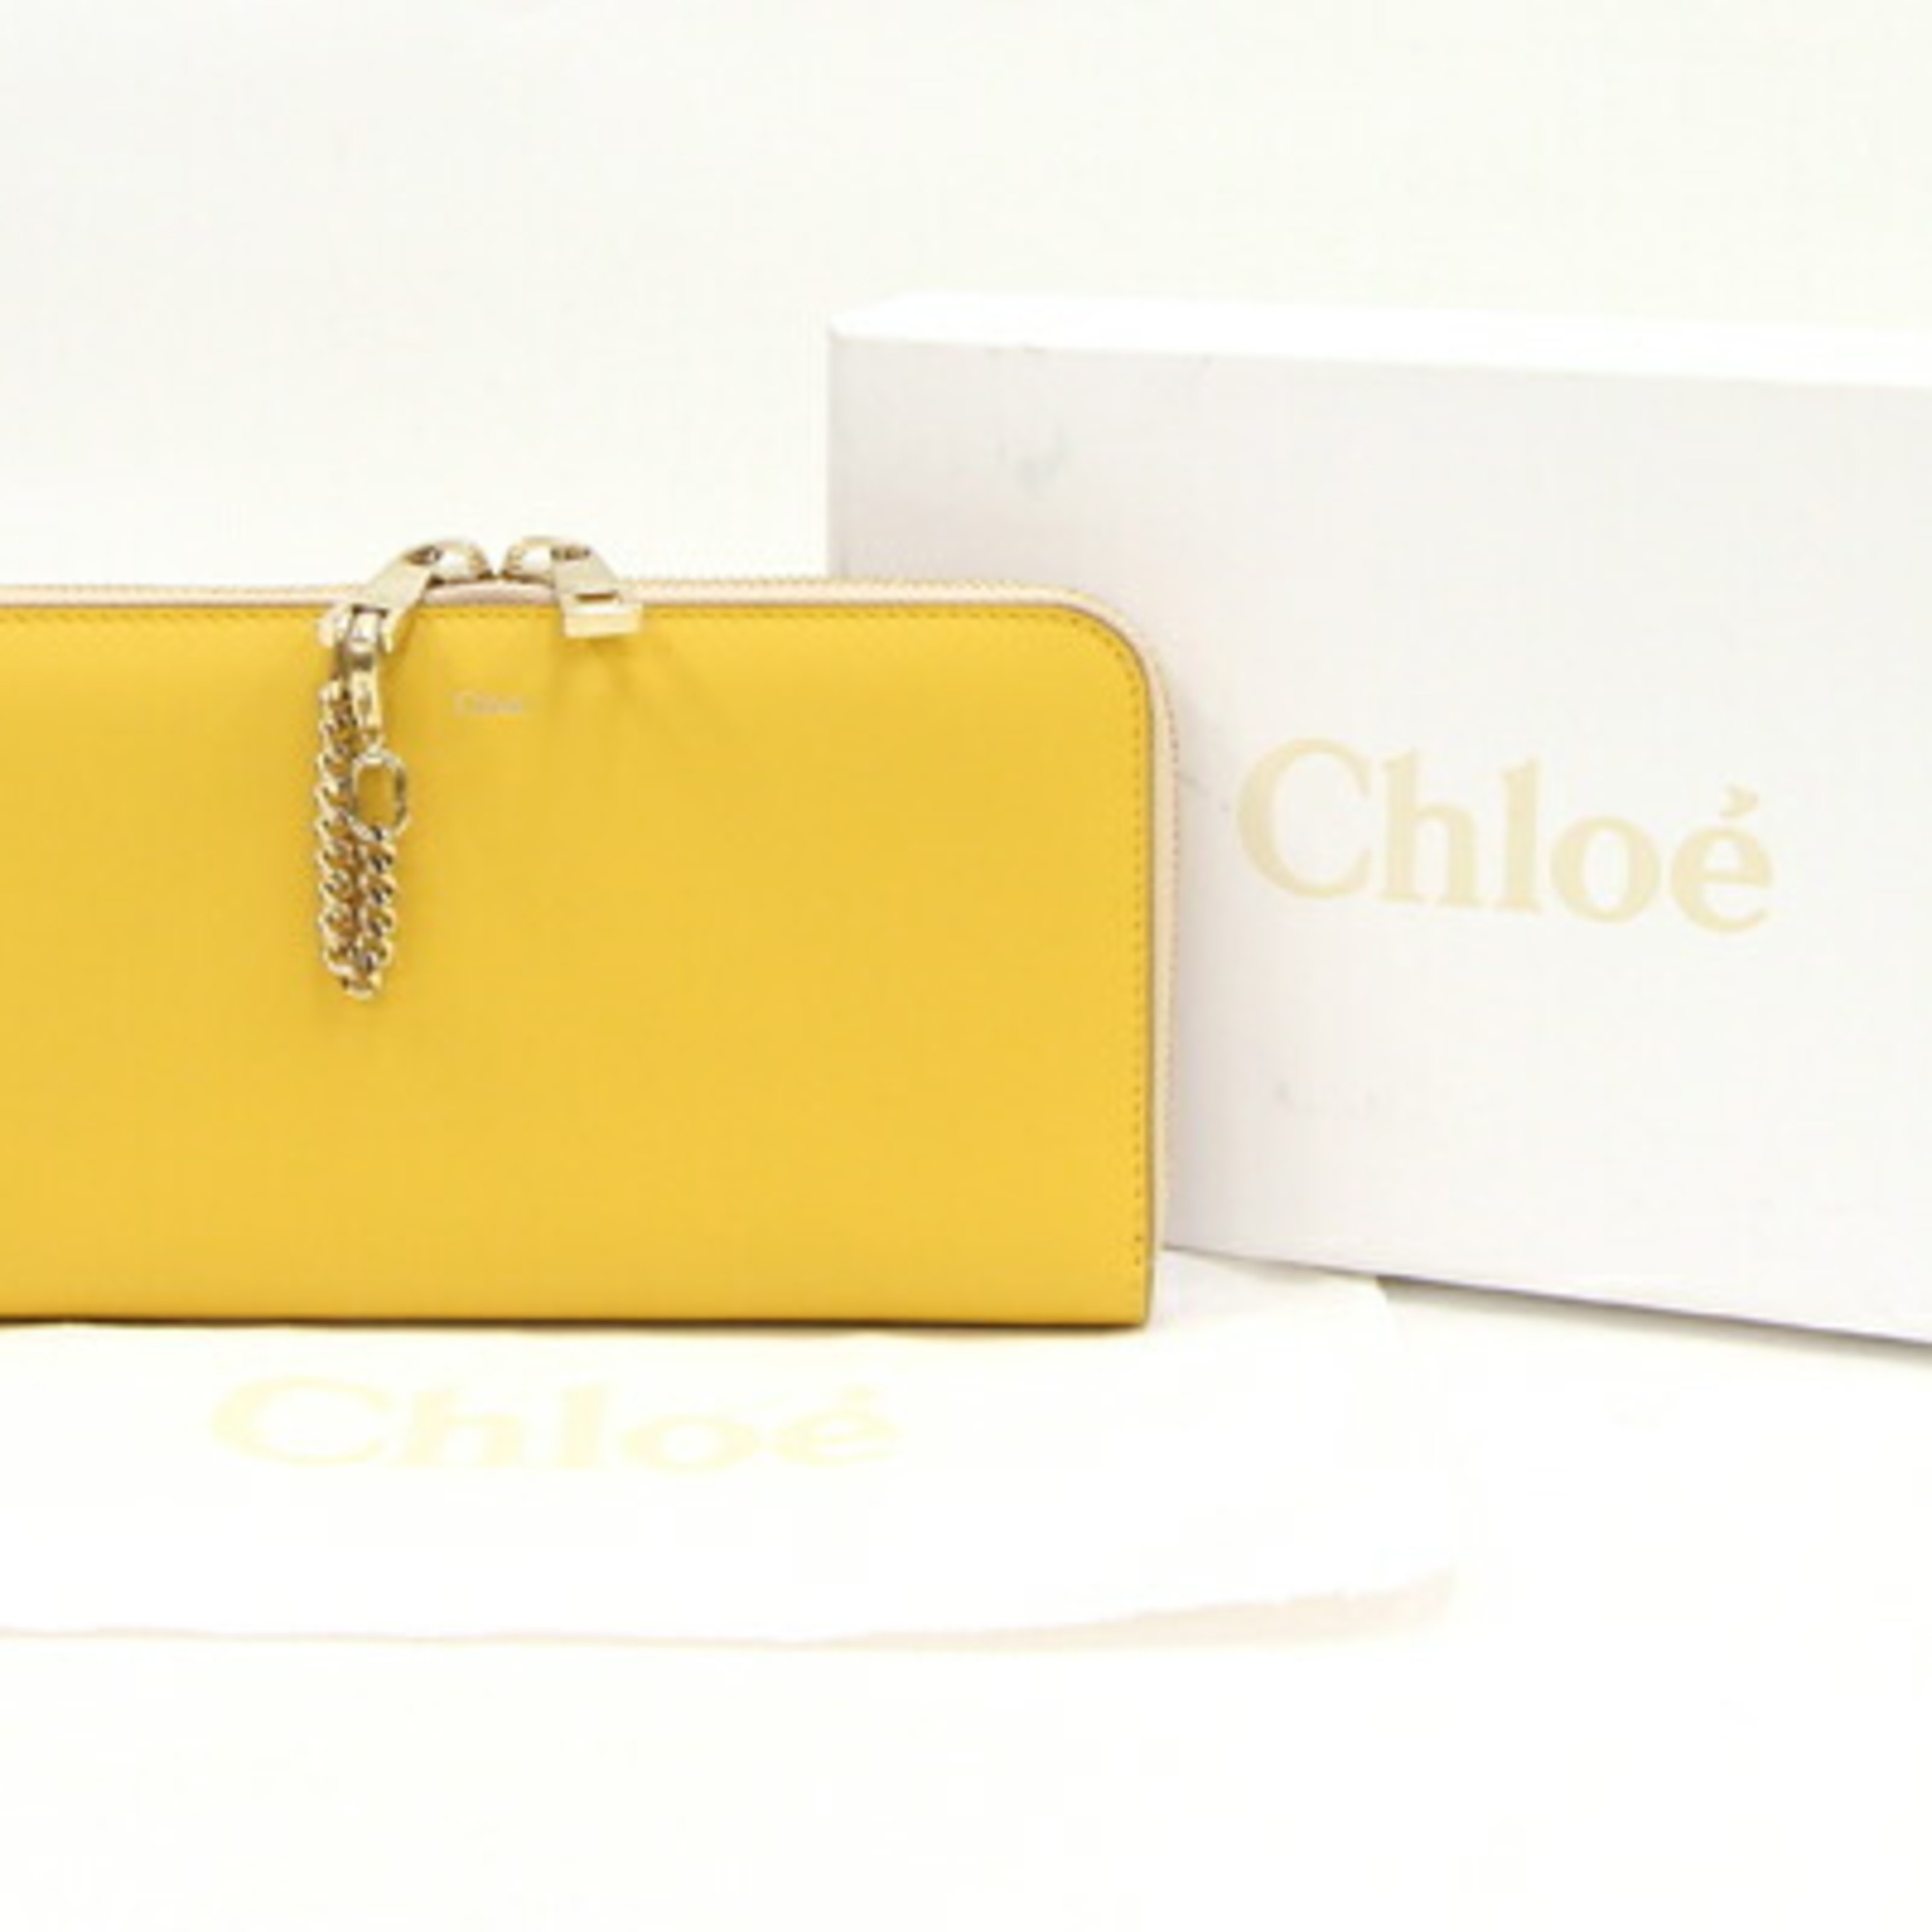 Chloé Chloe Round Long Wallet Bailey 3P0266 Yellow Beige Leather Women's Bicolor